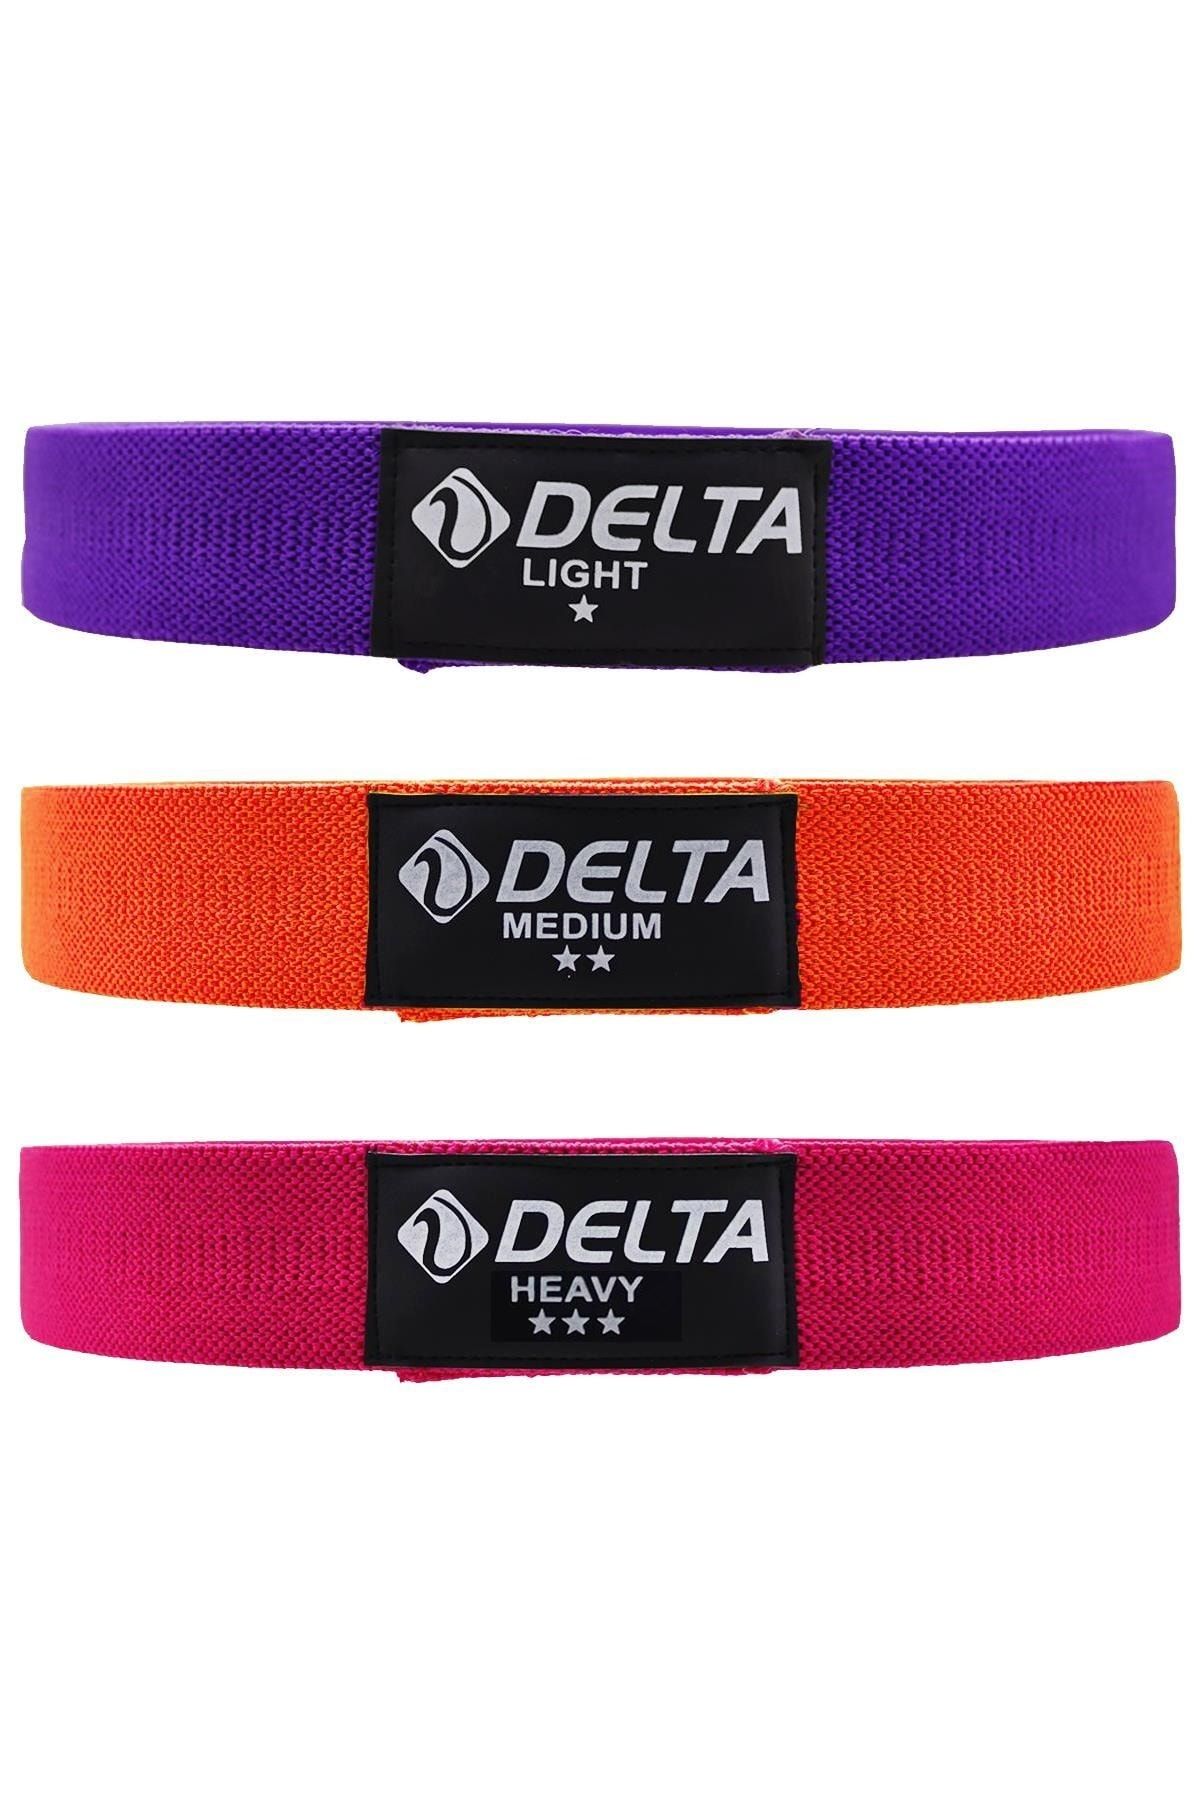 Delta 3 Adet Squat Bant Pilates Fitness Kalça Egzersizi Direnç Bandı Lastiği Seti (Uç Kısmı Kapalı)